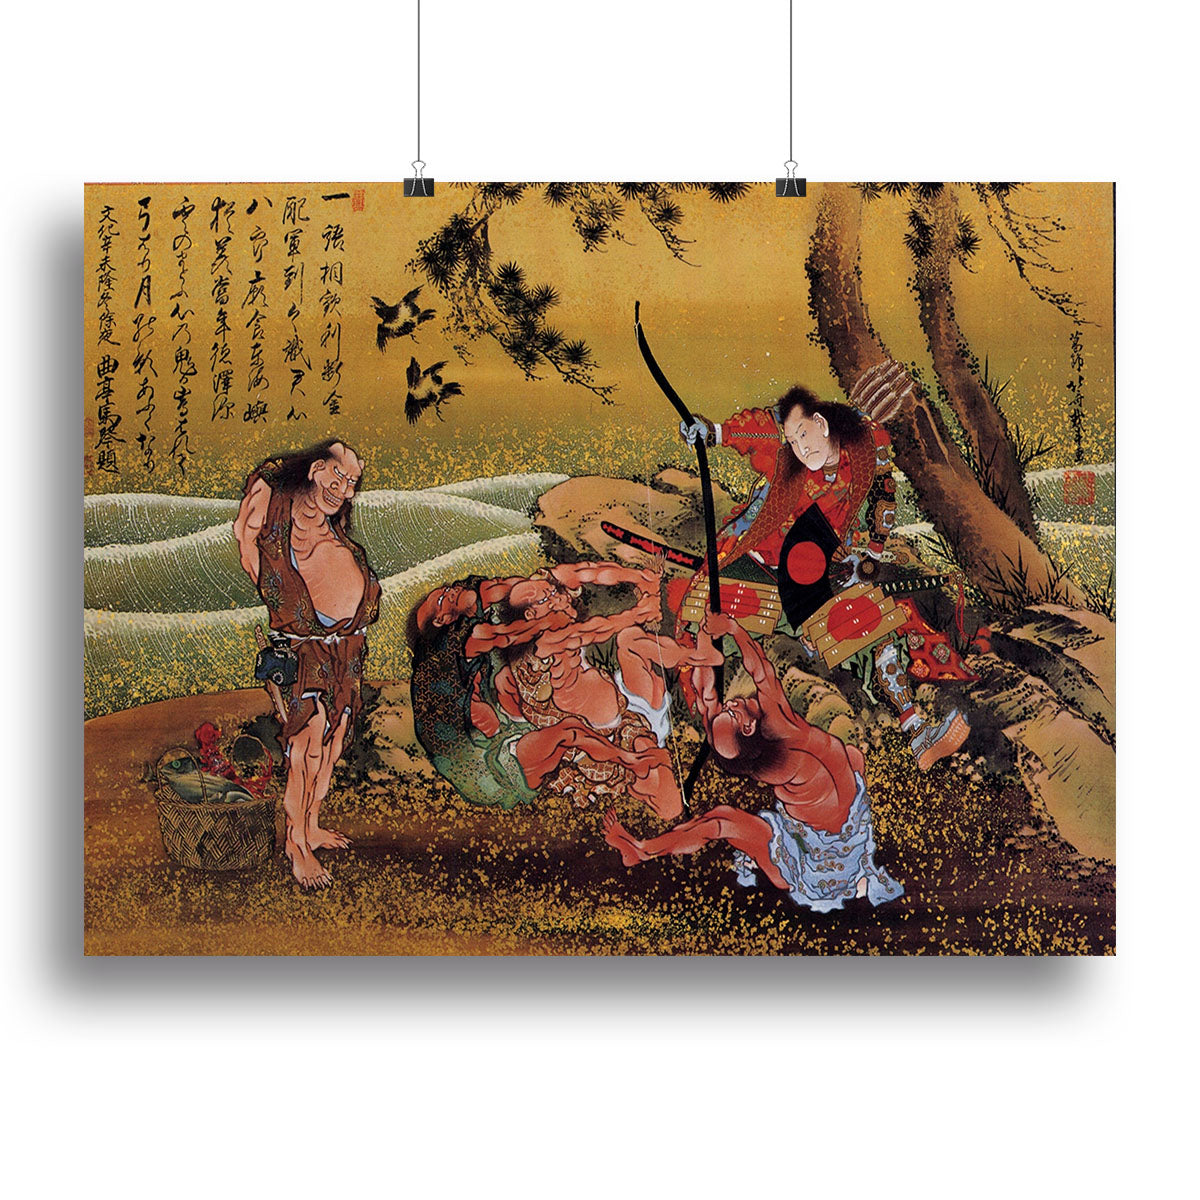 Tametomo on Demon island by Hokusai Canvas Print or Poster - Canvas Art Rocks - 2